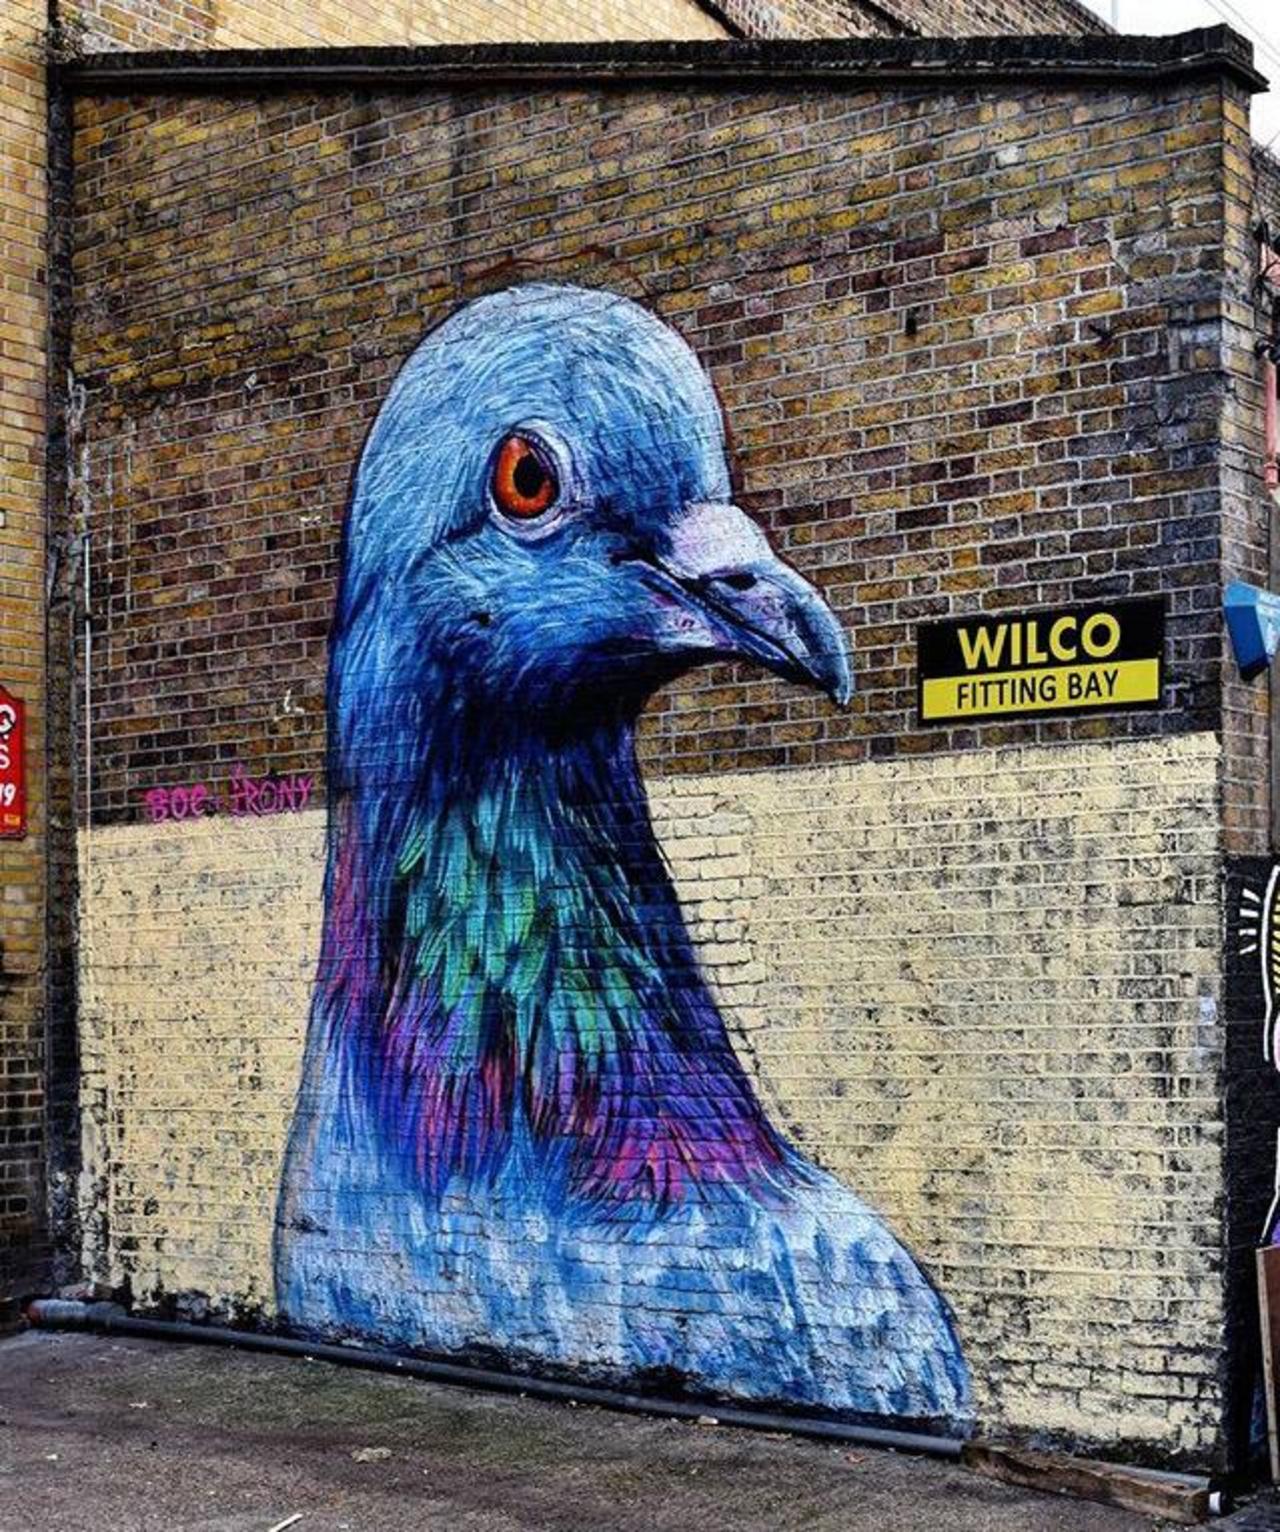 Street Art by Placee Boe & whoamirony in London 

#art #graffiti #mural #streetart http://t.co/xrzzJwFQ25 … … … … http://twitter.com/GoogleStreetArt/status/652357036542414848/photo/1/large?utm_source=fb&utm_medium=fb&utm_campaign=charlesjackso14&utm_content=652360974230507520